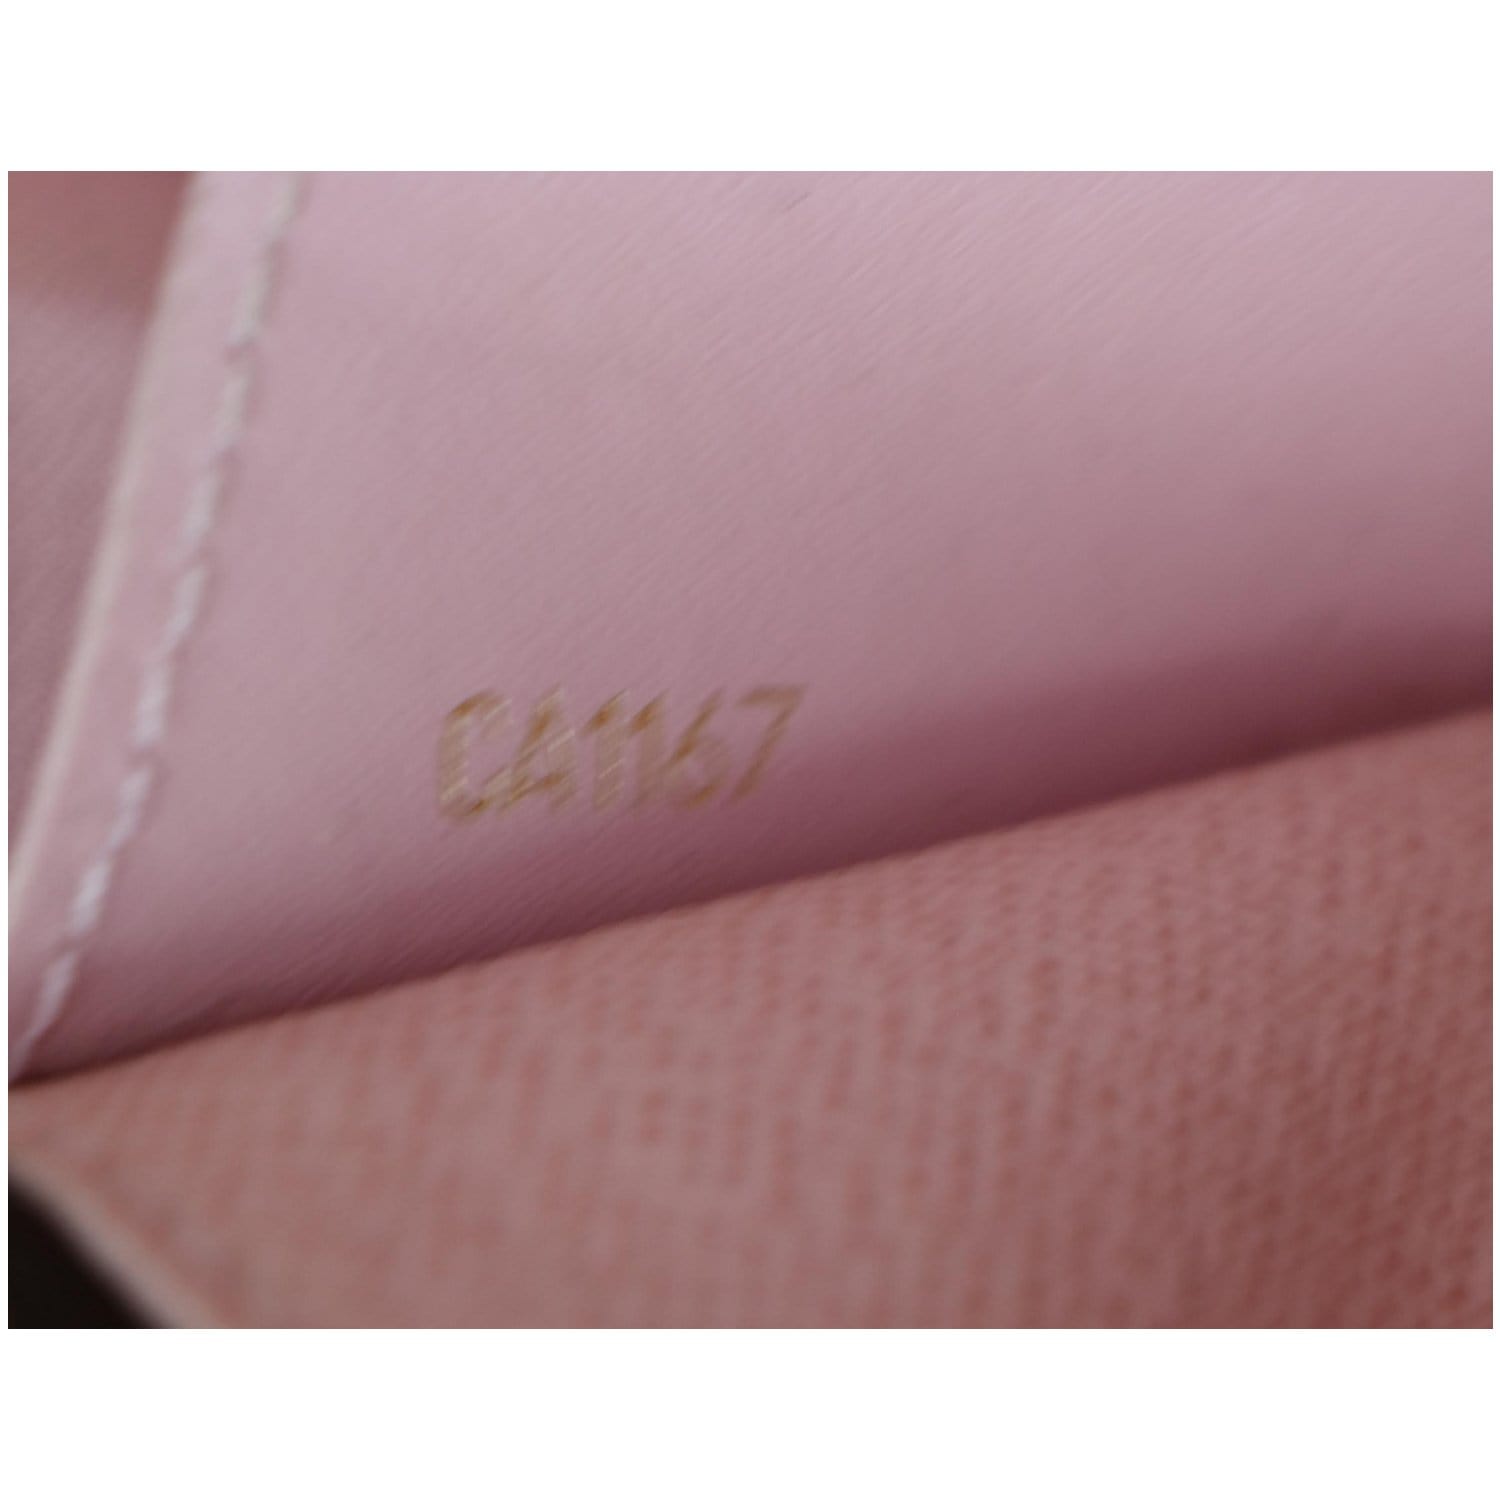 Authentic Louis Vuitton Damier Portefeuille Caissa Long Wallet N61221 Brown  Pink